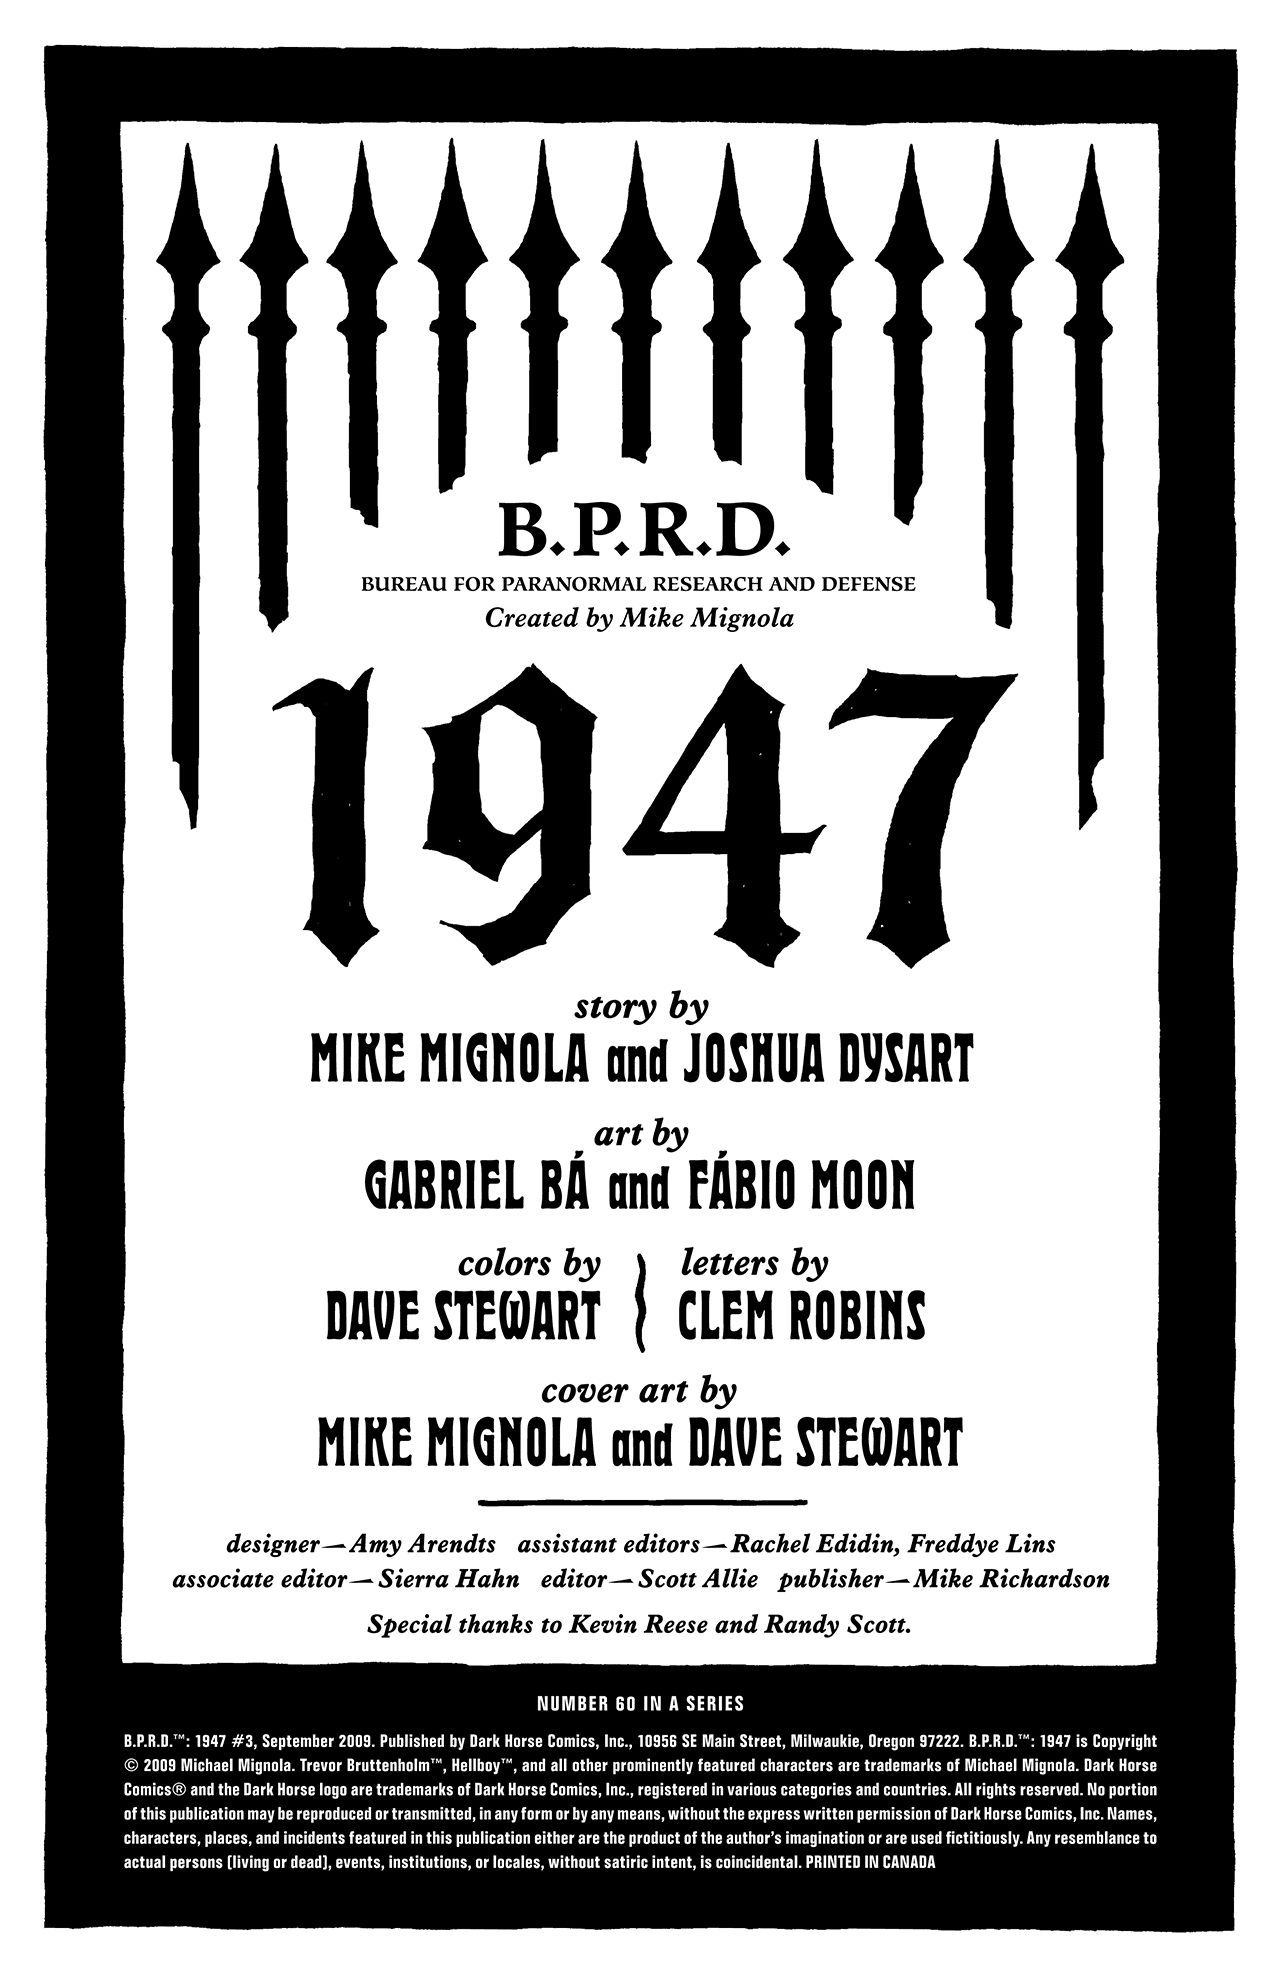 Read online B.P.R.D.: 1947 comic -  Issue #3 - 2